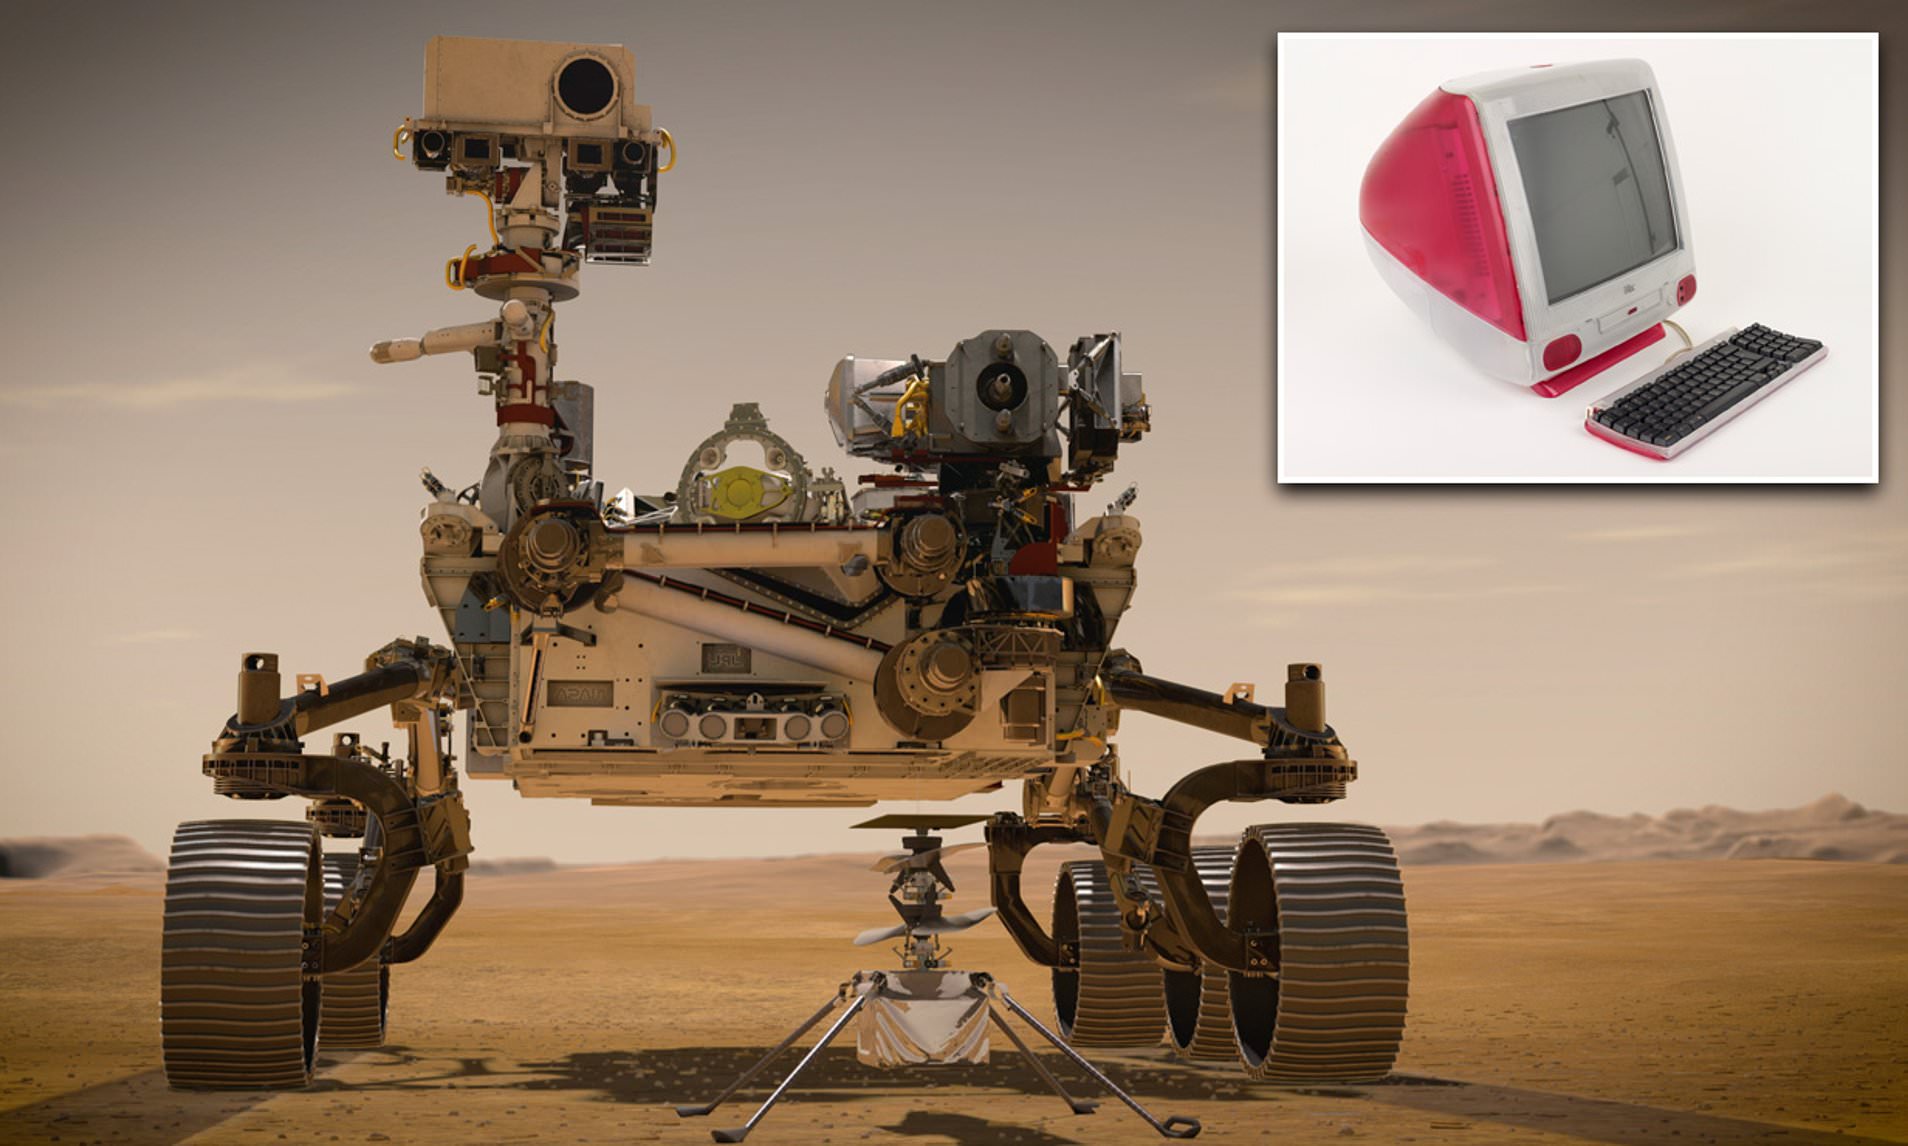 NASA’s new Mars rover has a similar processor as an iMac from 1998